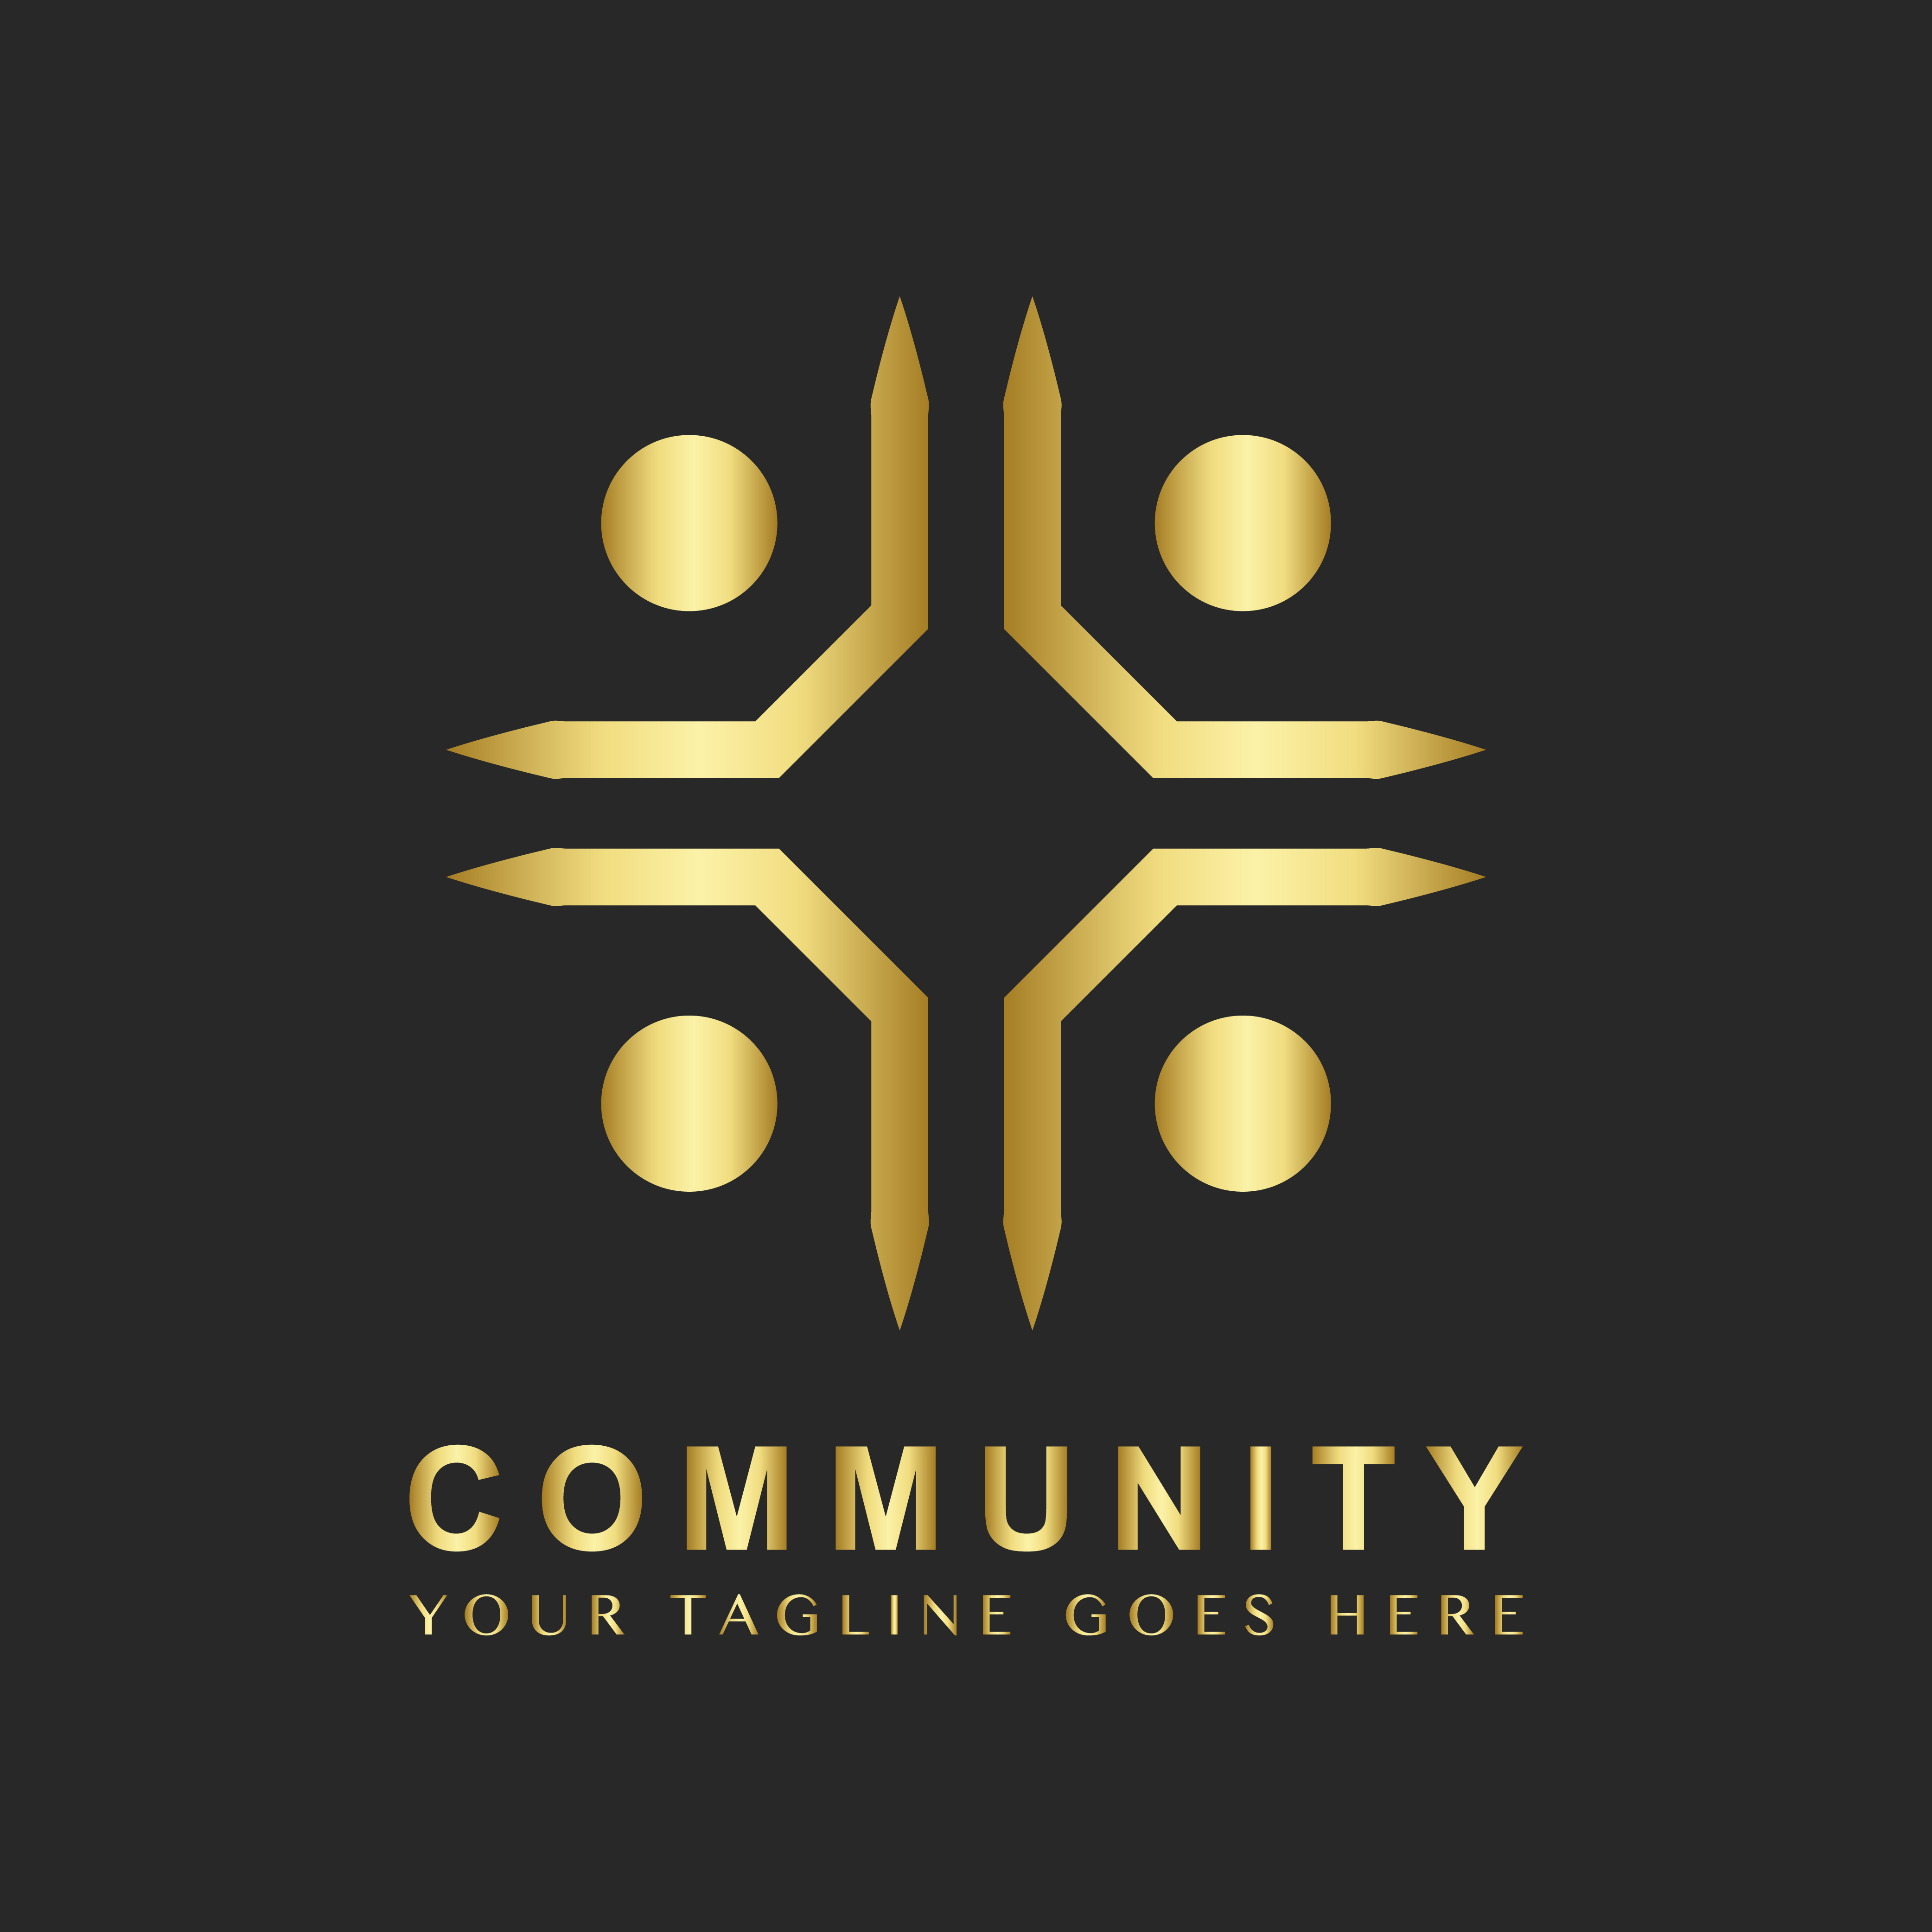  Community  branding logo  design sample Download Free 